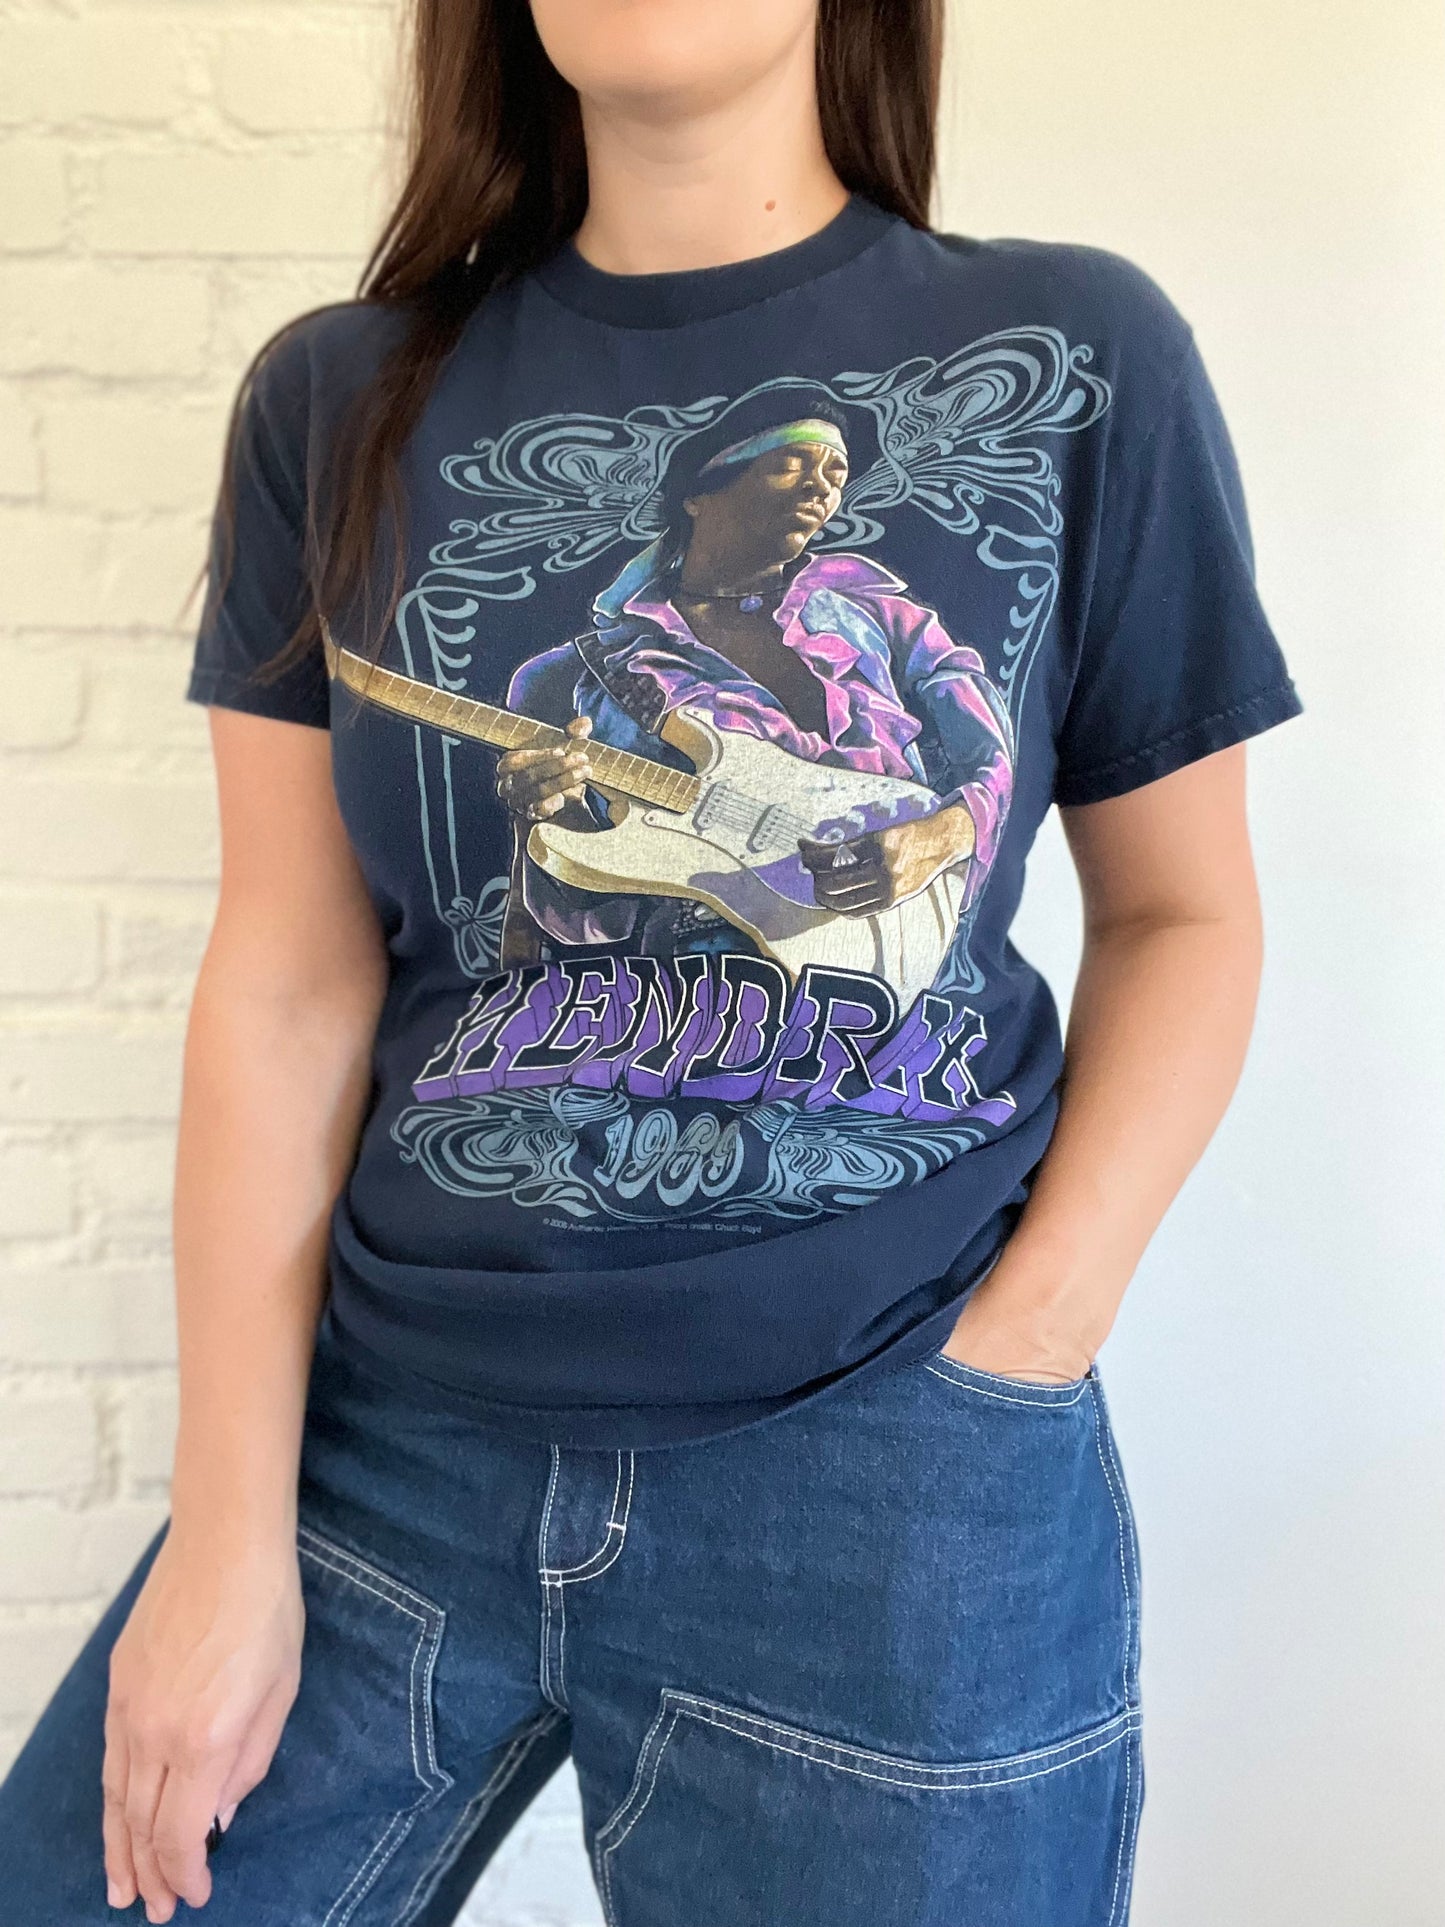 Jimi Hendrix 2006 T-Shirt - Size M